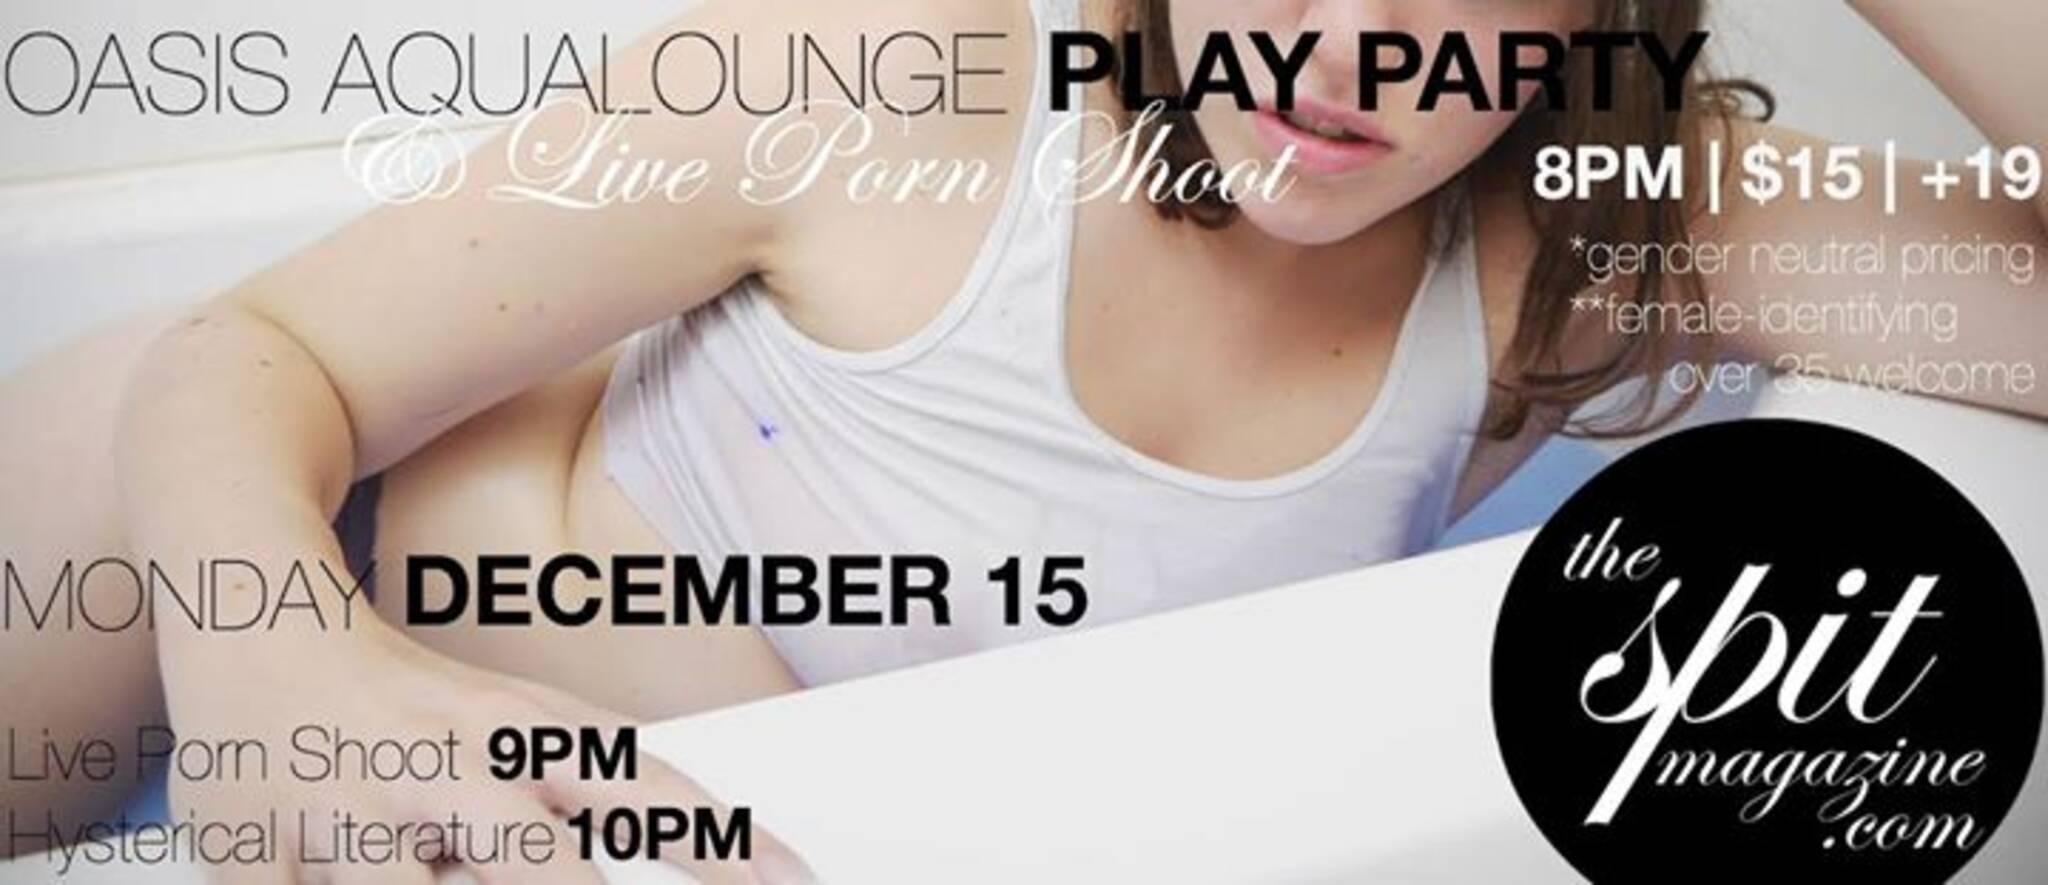 Live Porn Party - Spit Play Party & Live Porn Shoot @ Oasis Aqualonge $15 Gender Neutral  Pricing 19-35